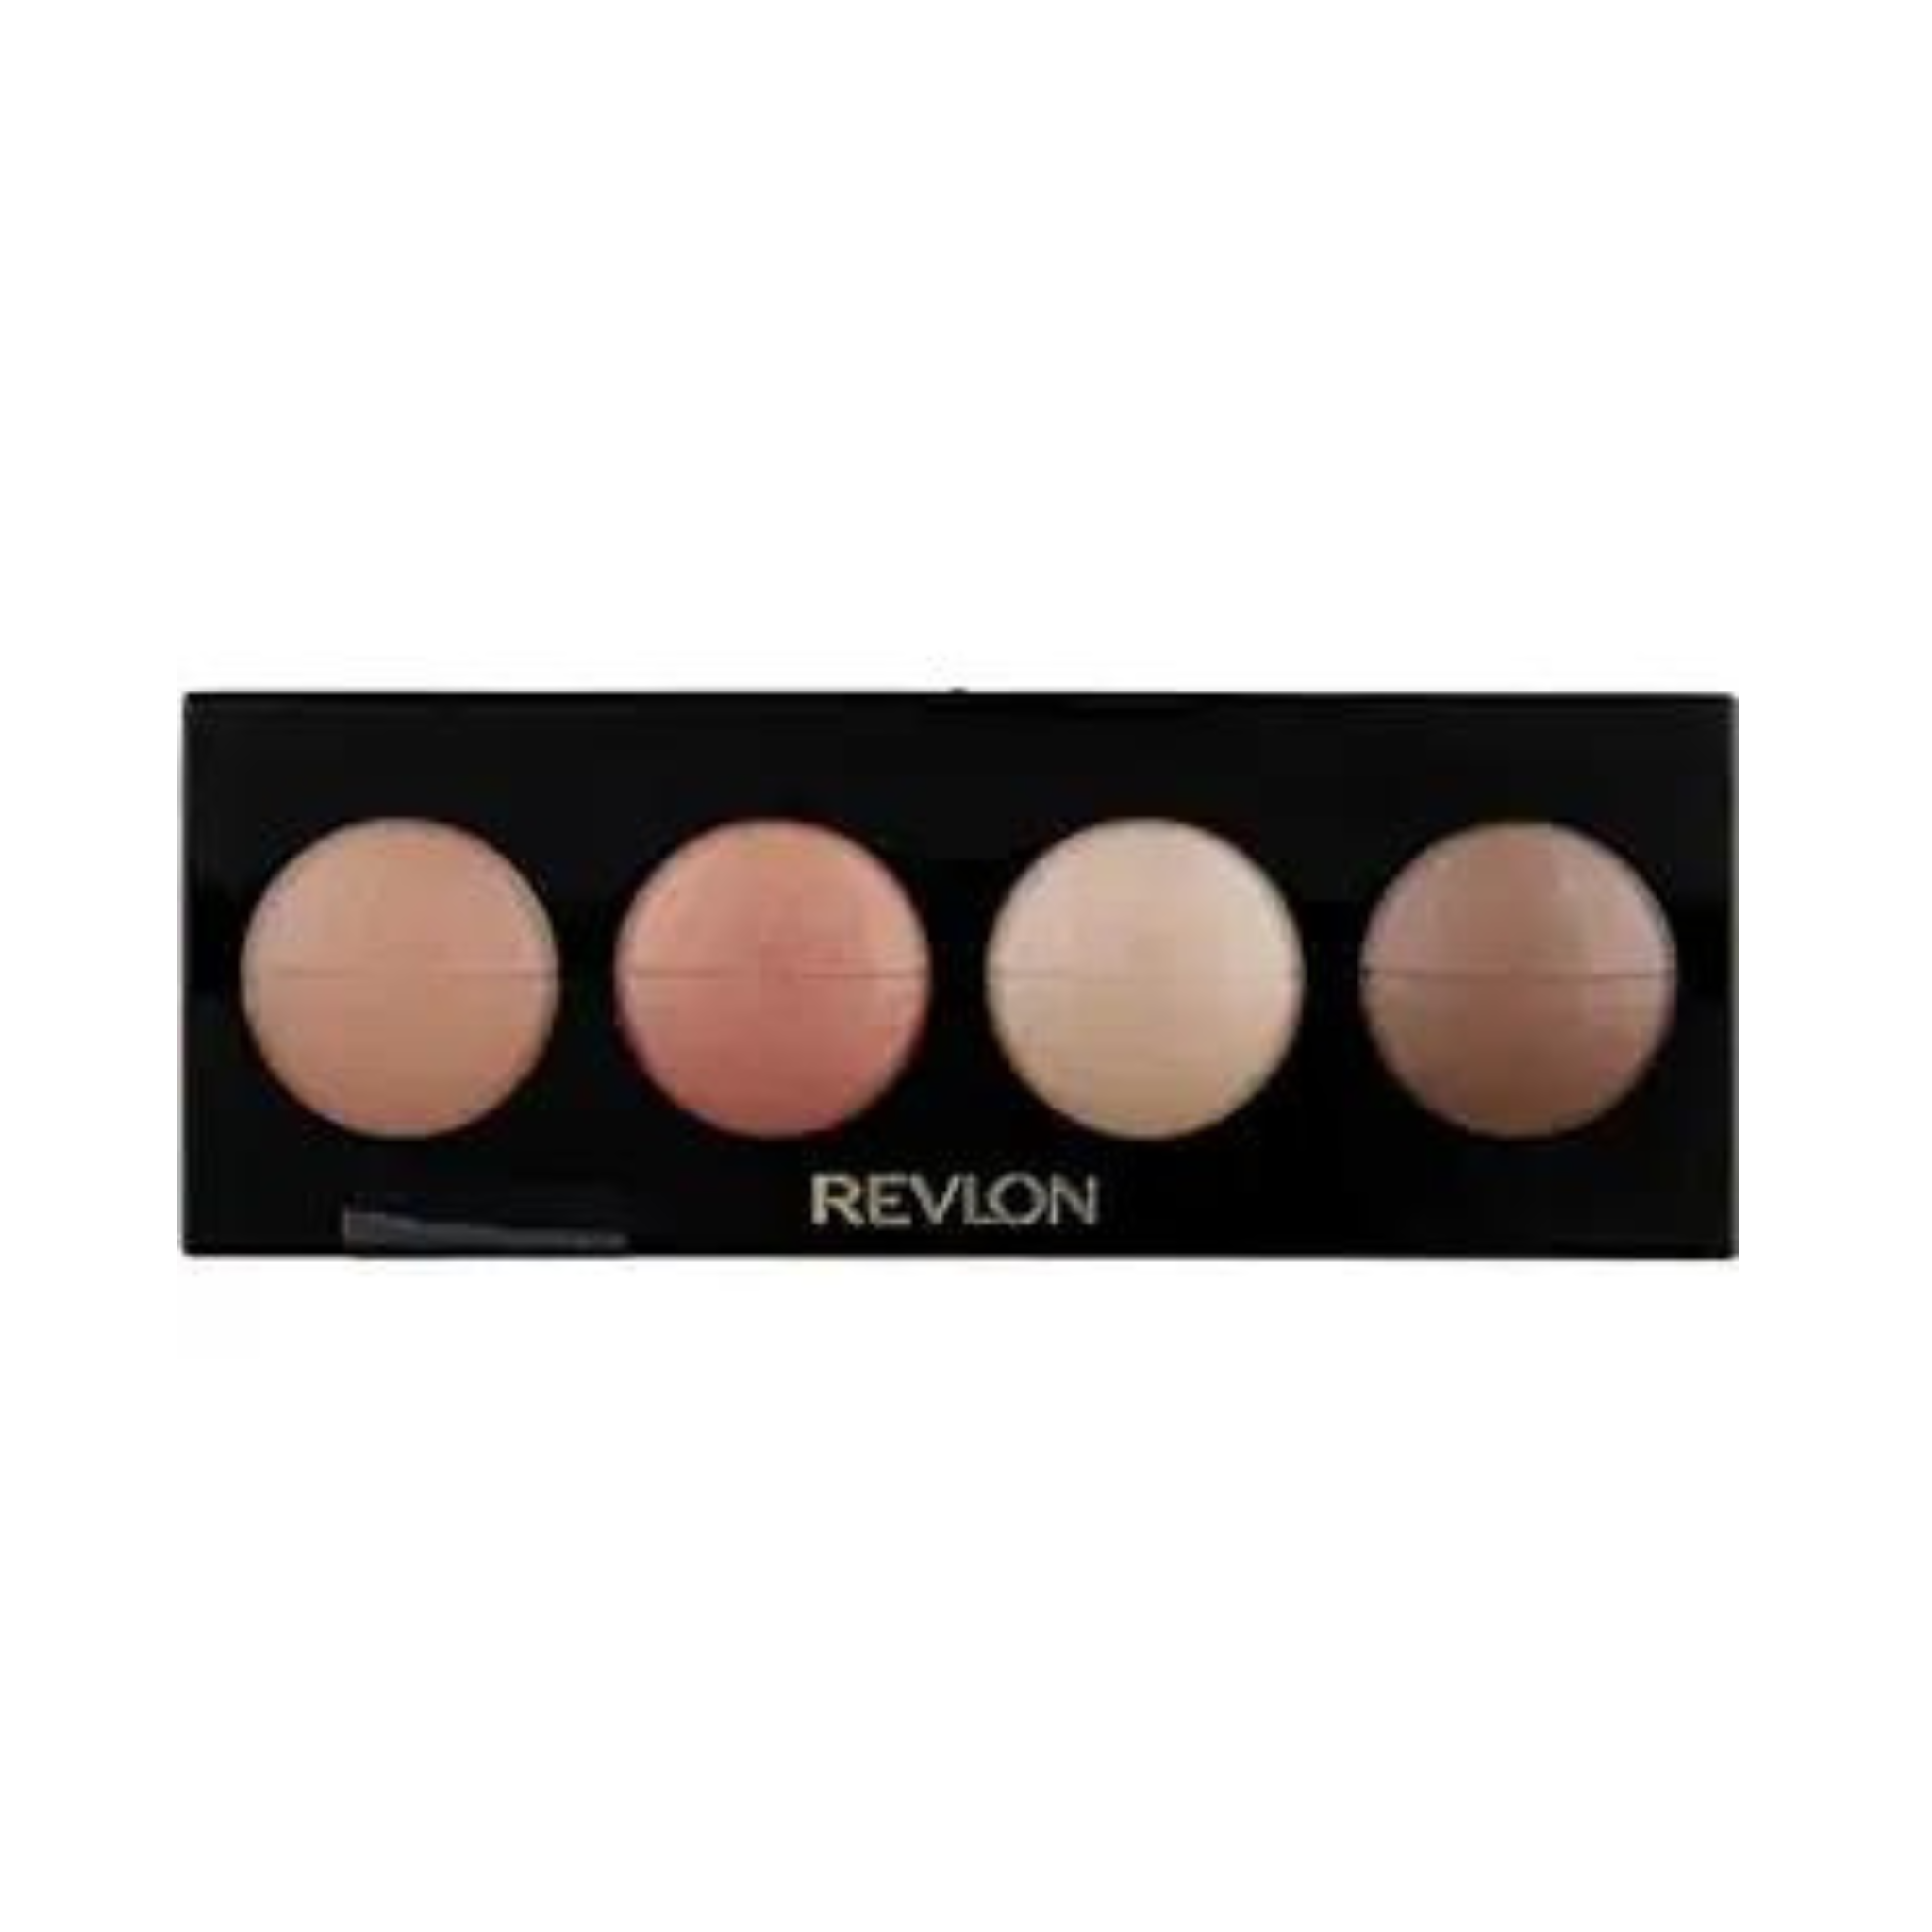 0.12-Oz Revlon Illuminance Crème Eye Shadow Palette (Skinlights)